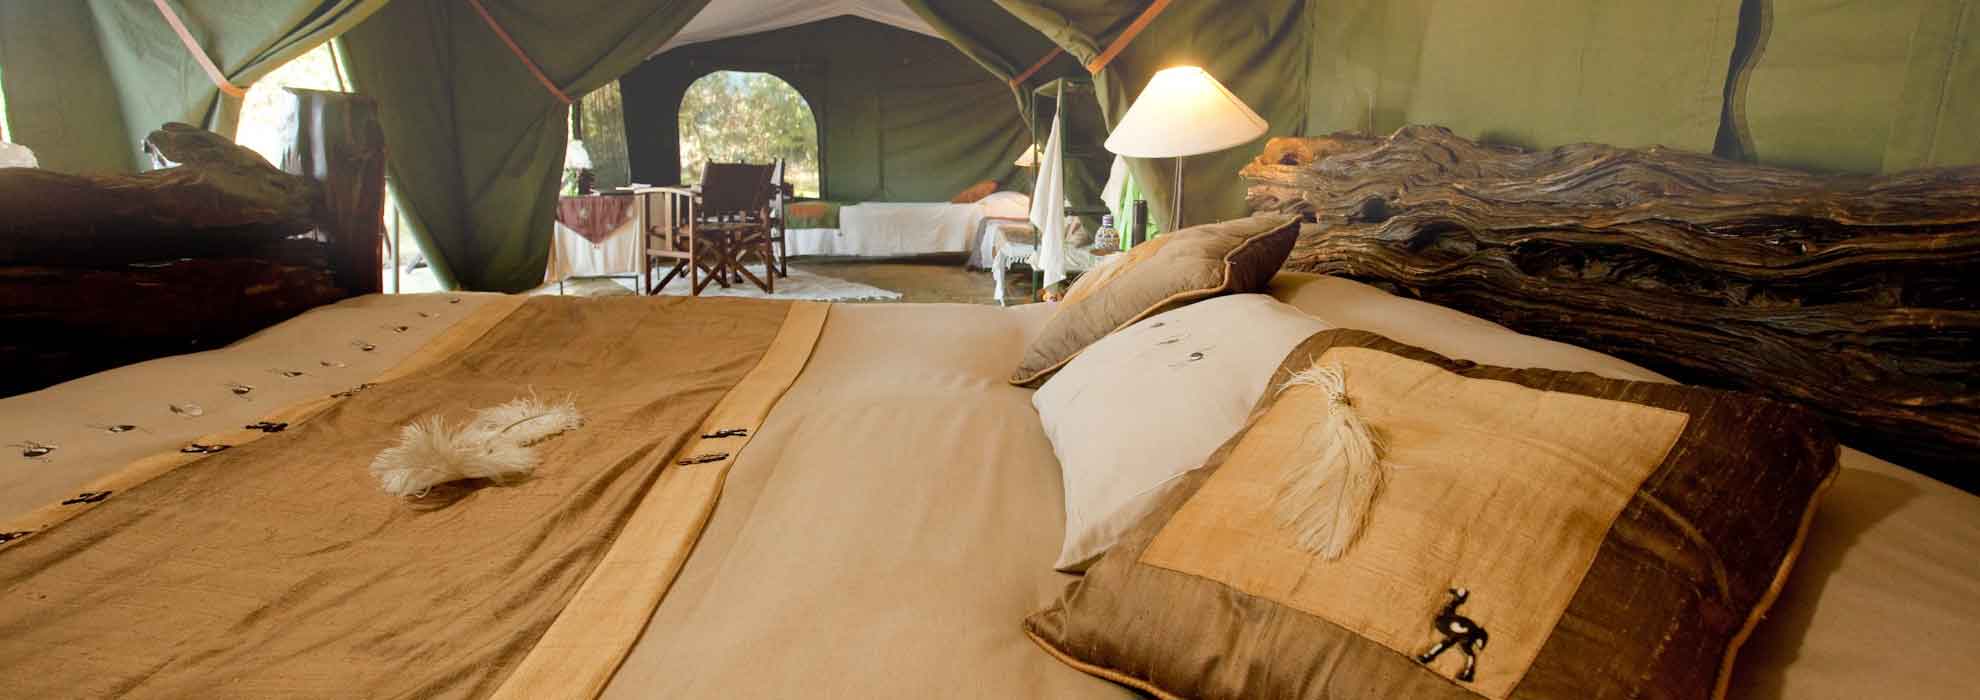 Tanzania Budget Camping Safari (Mwanza To Arusha)  